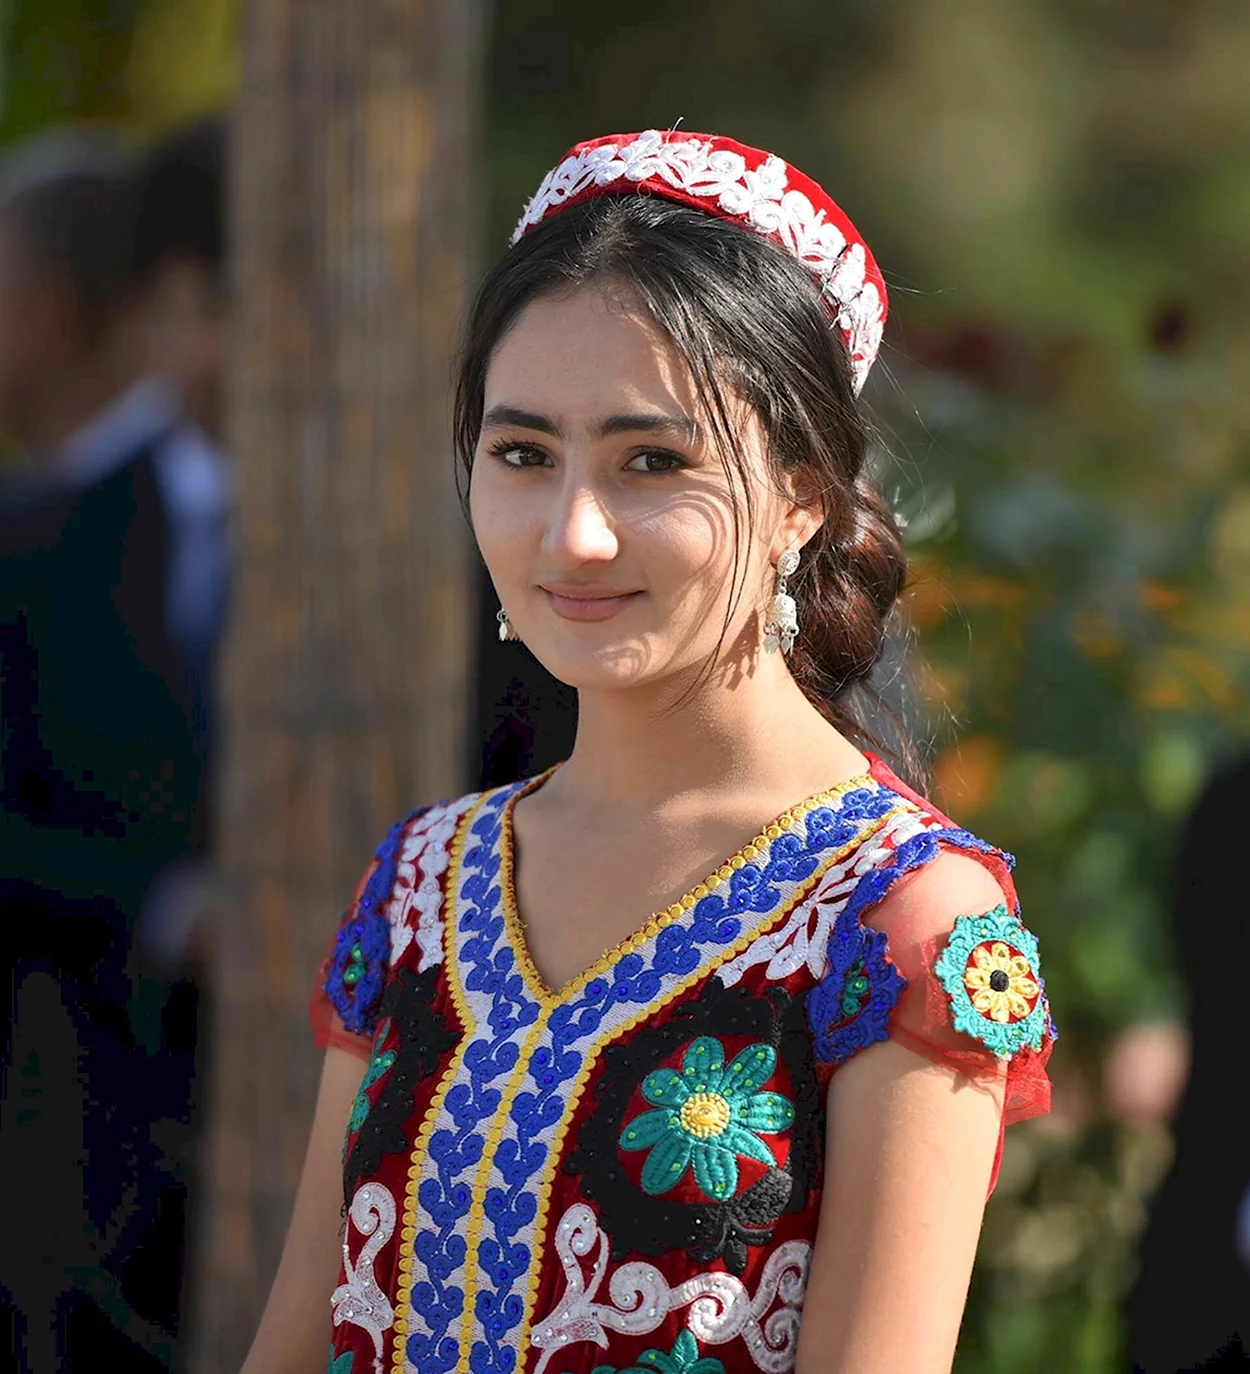 Таджичка Есуман Холова фигура. Красивая девушка